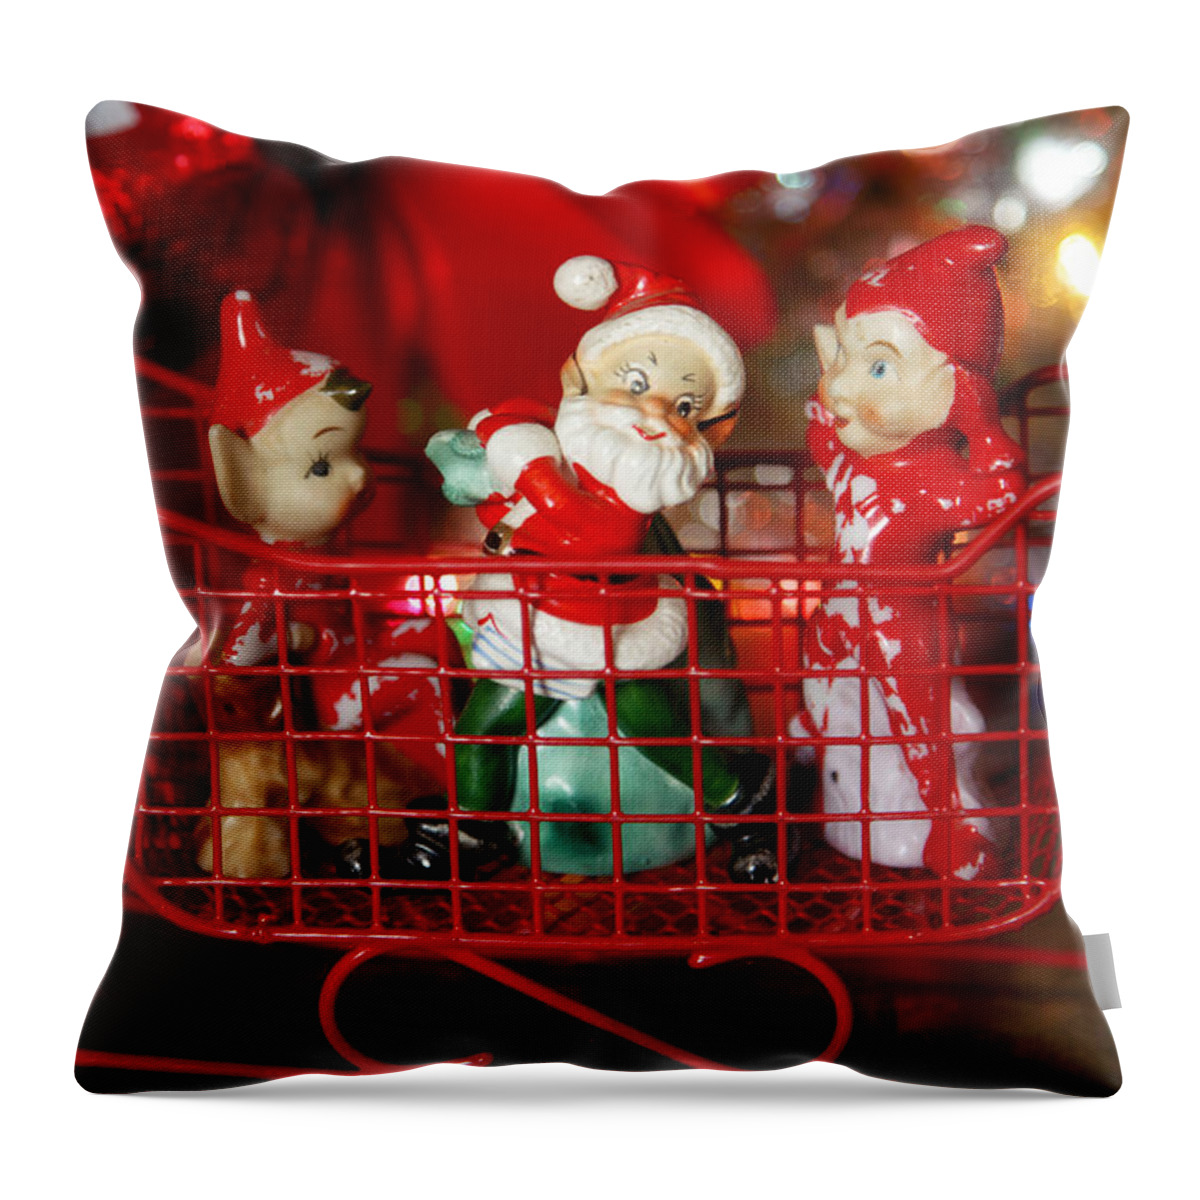 Santa Throw Pillow featuring the photograph Santa and his Elves by Toni Hopper